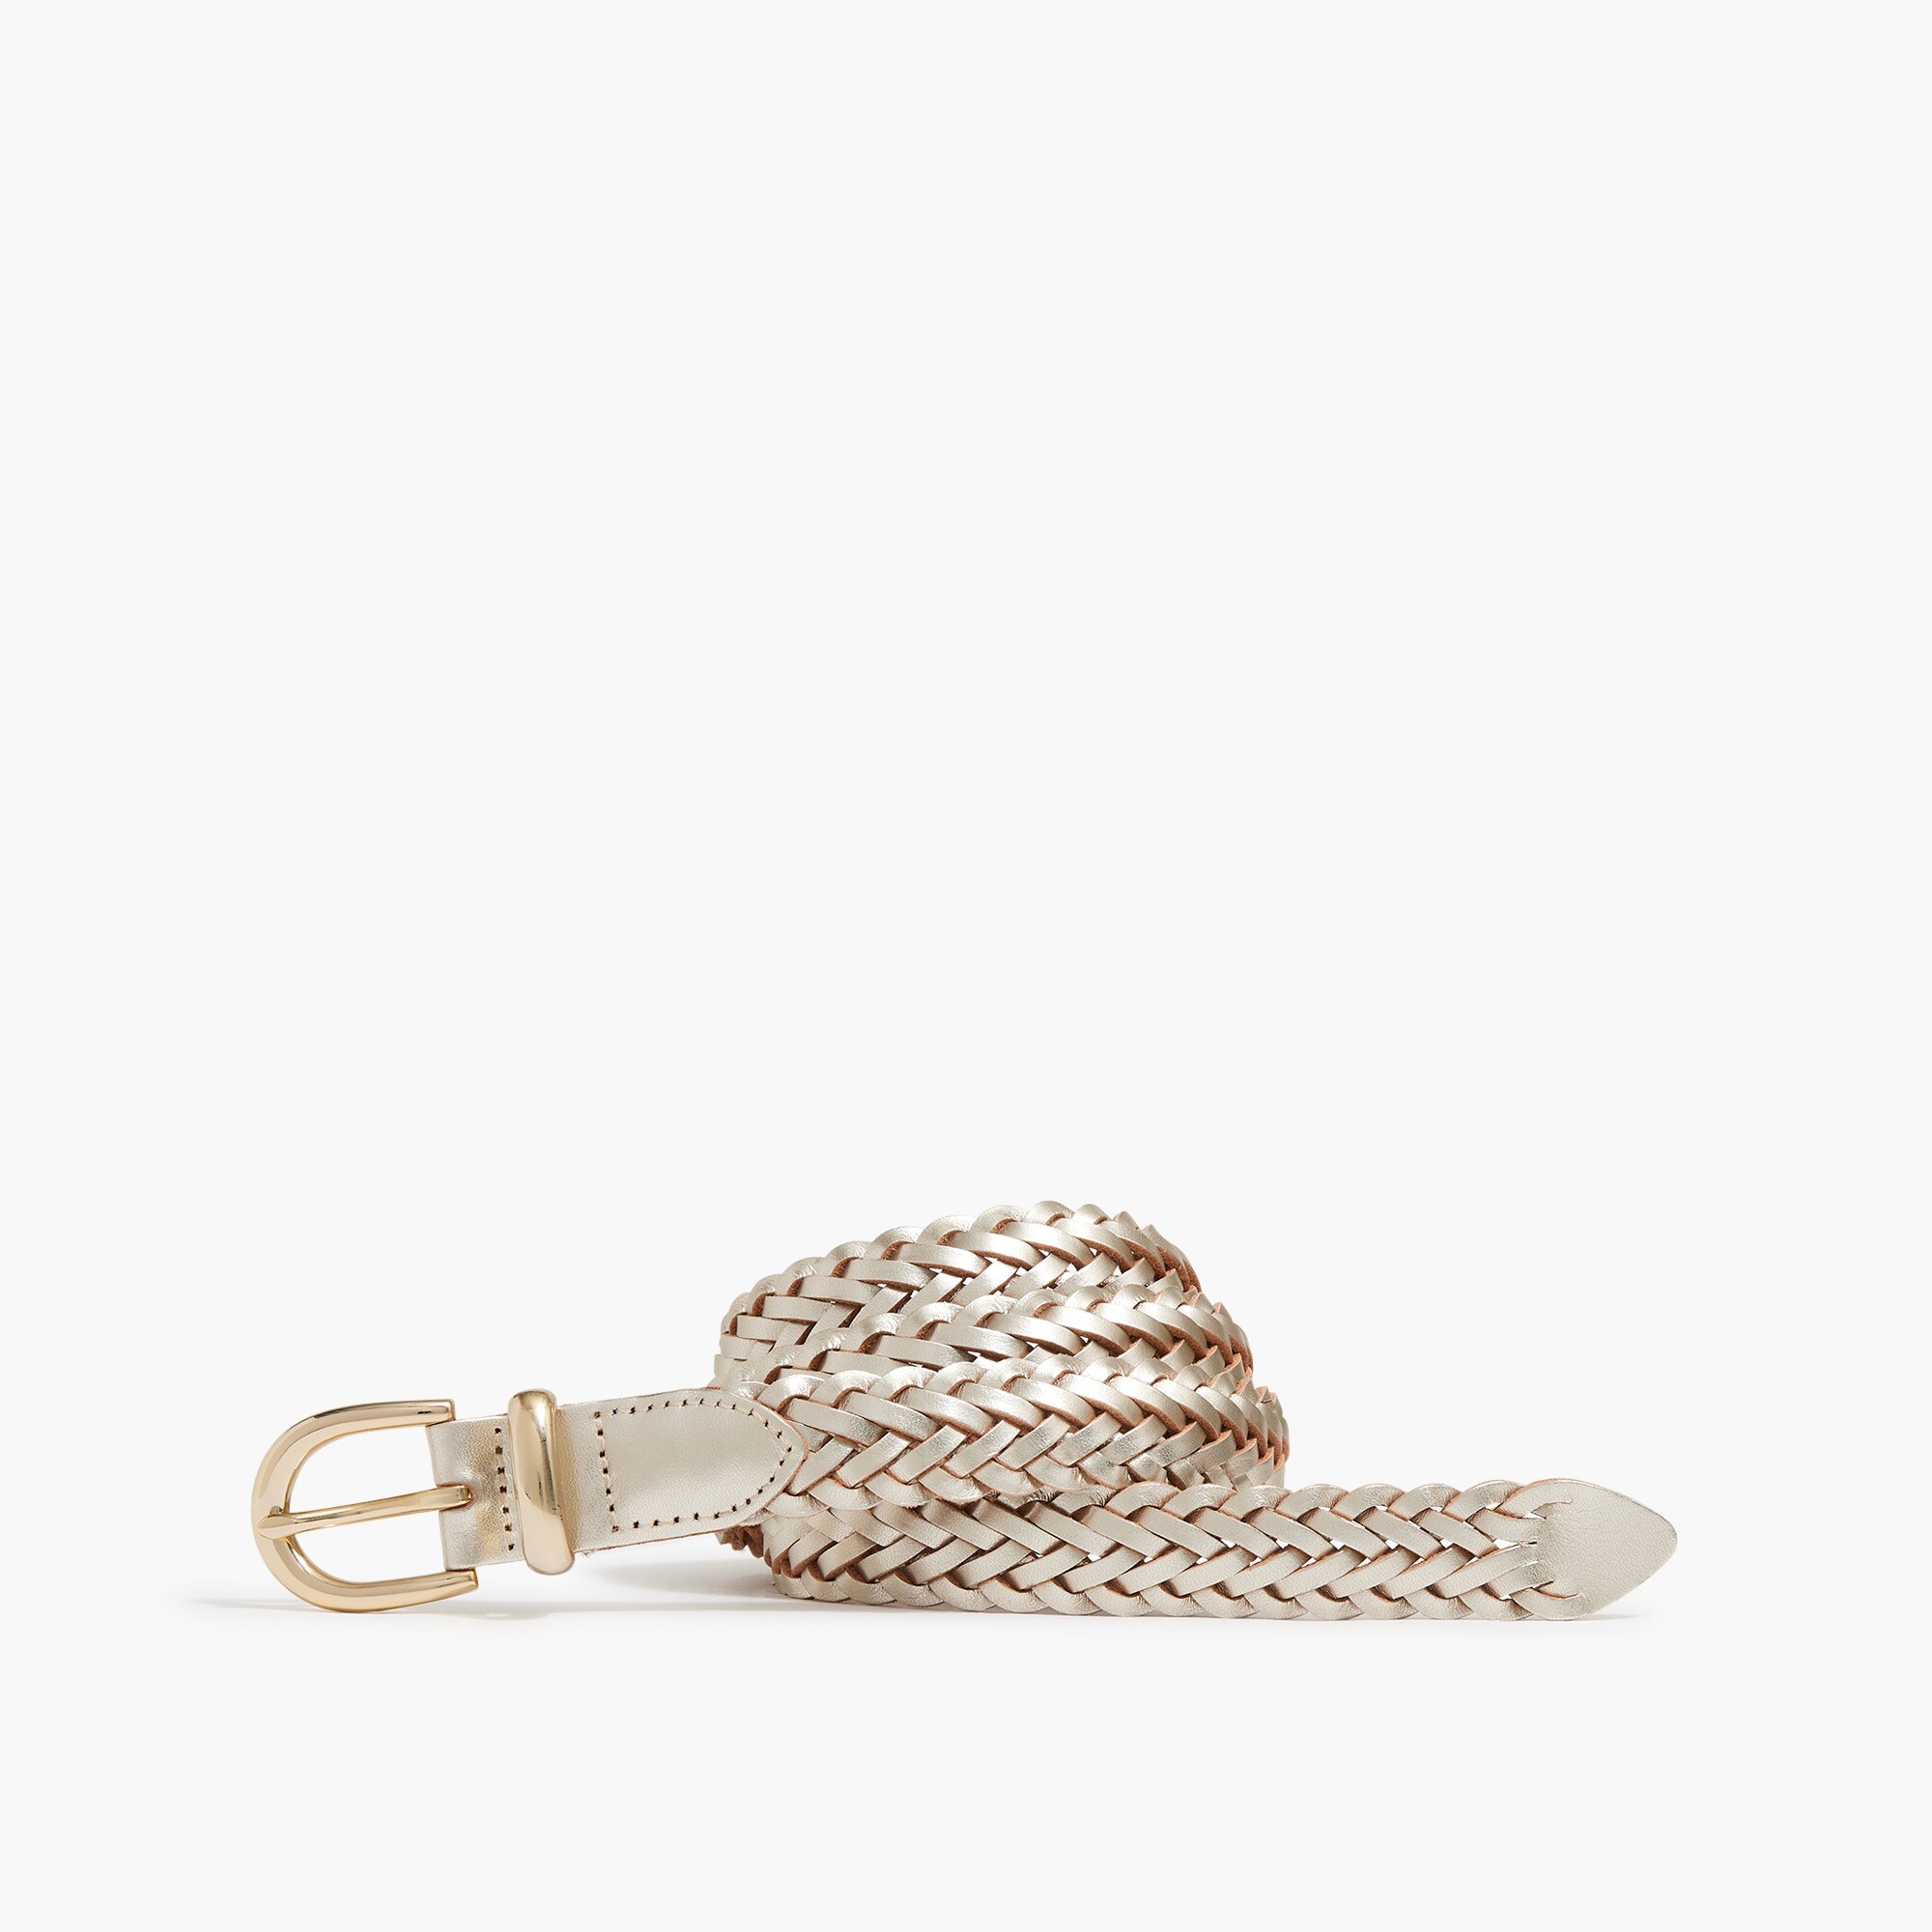  Metallic leather slim braided belt